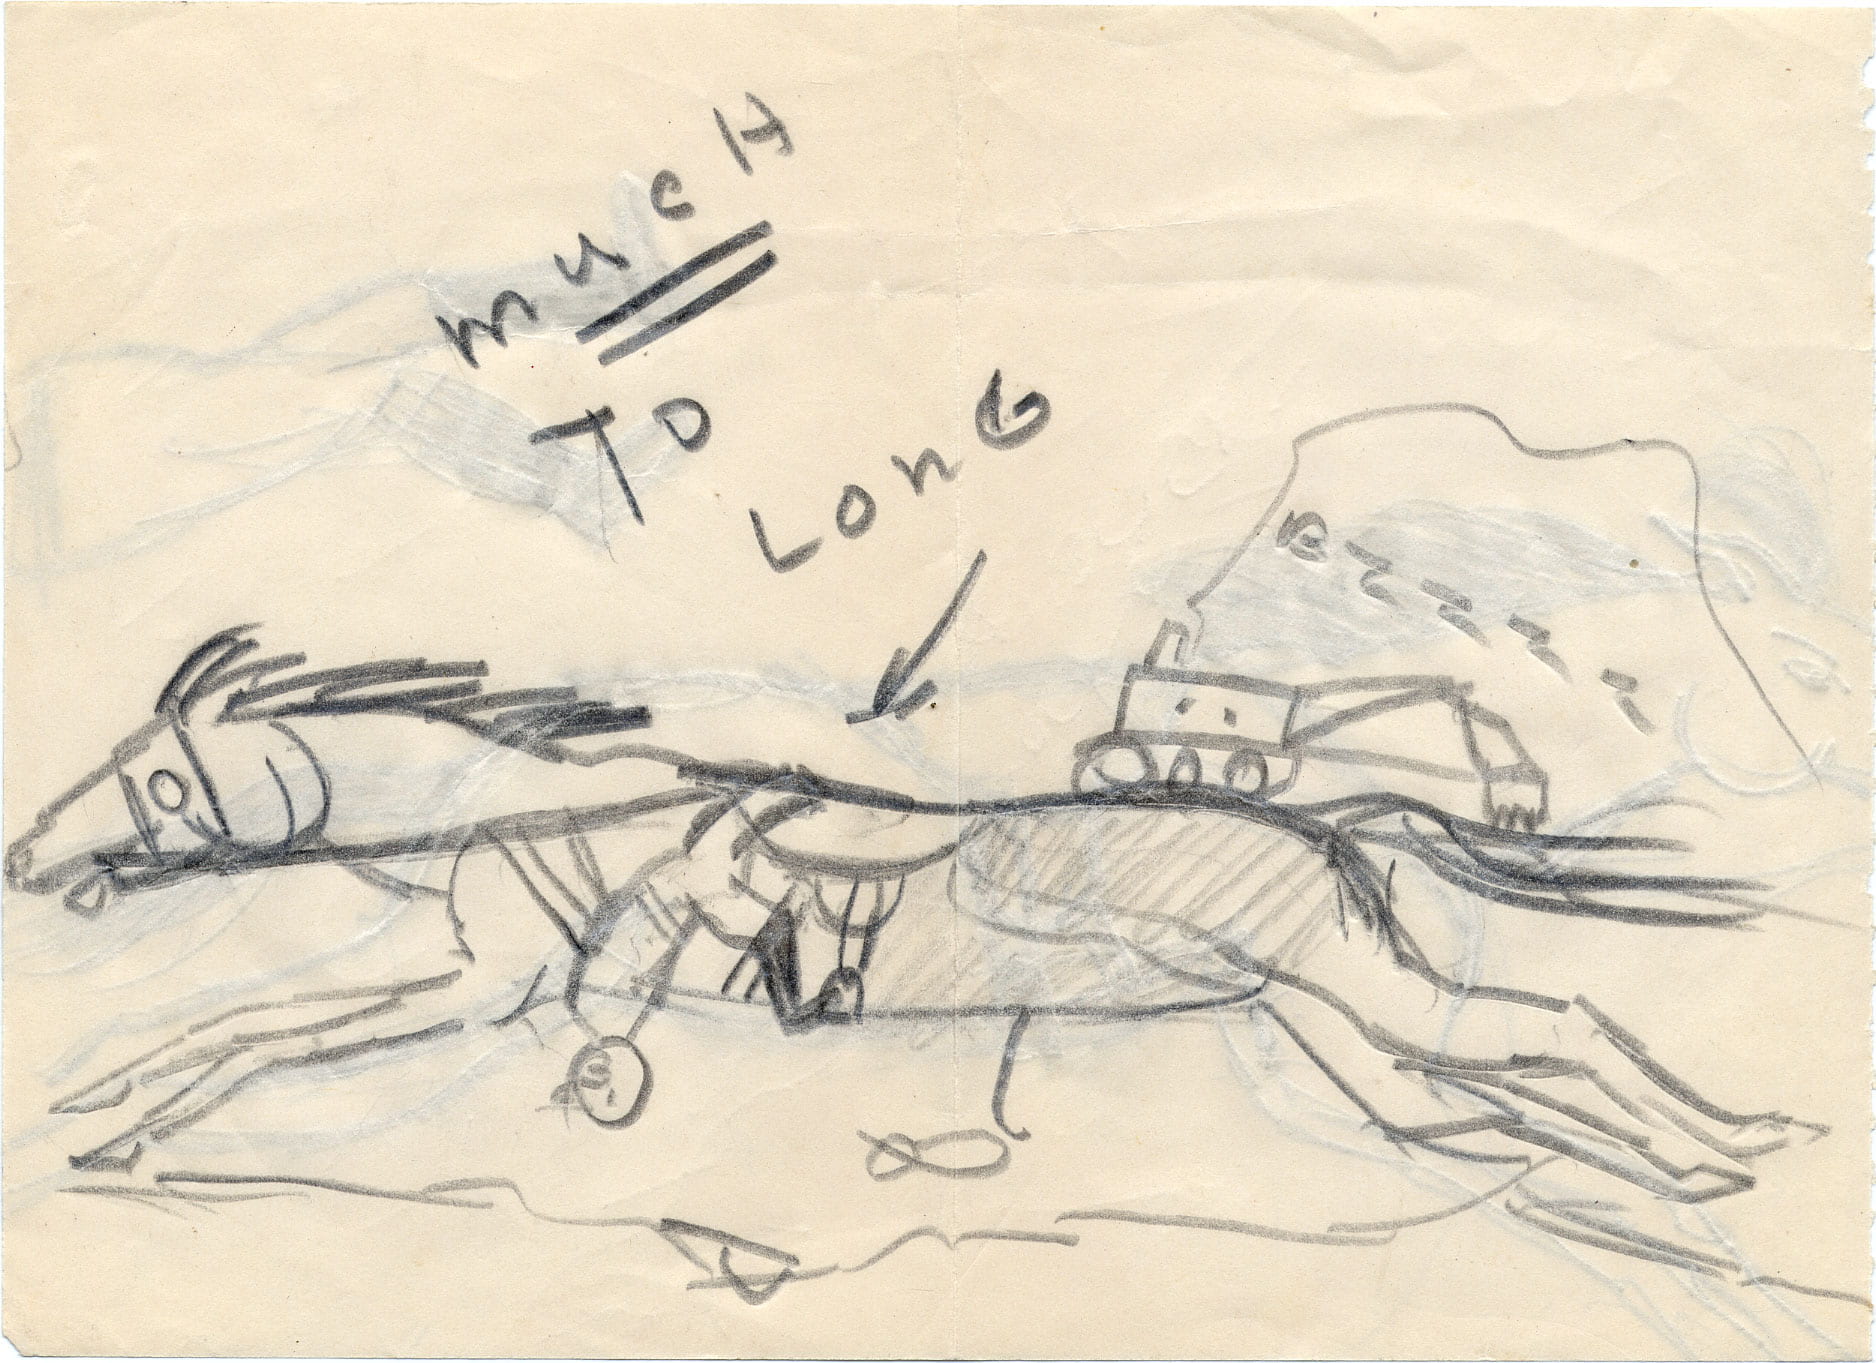 Sketch of a horse by Richard Aldridge, 1940